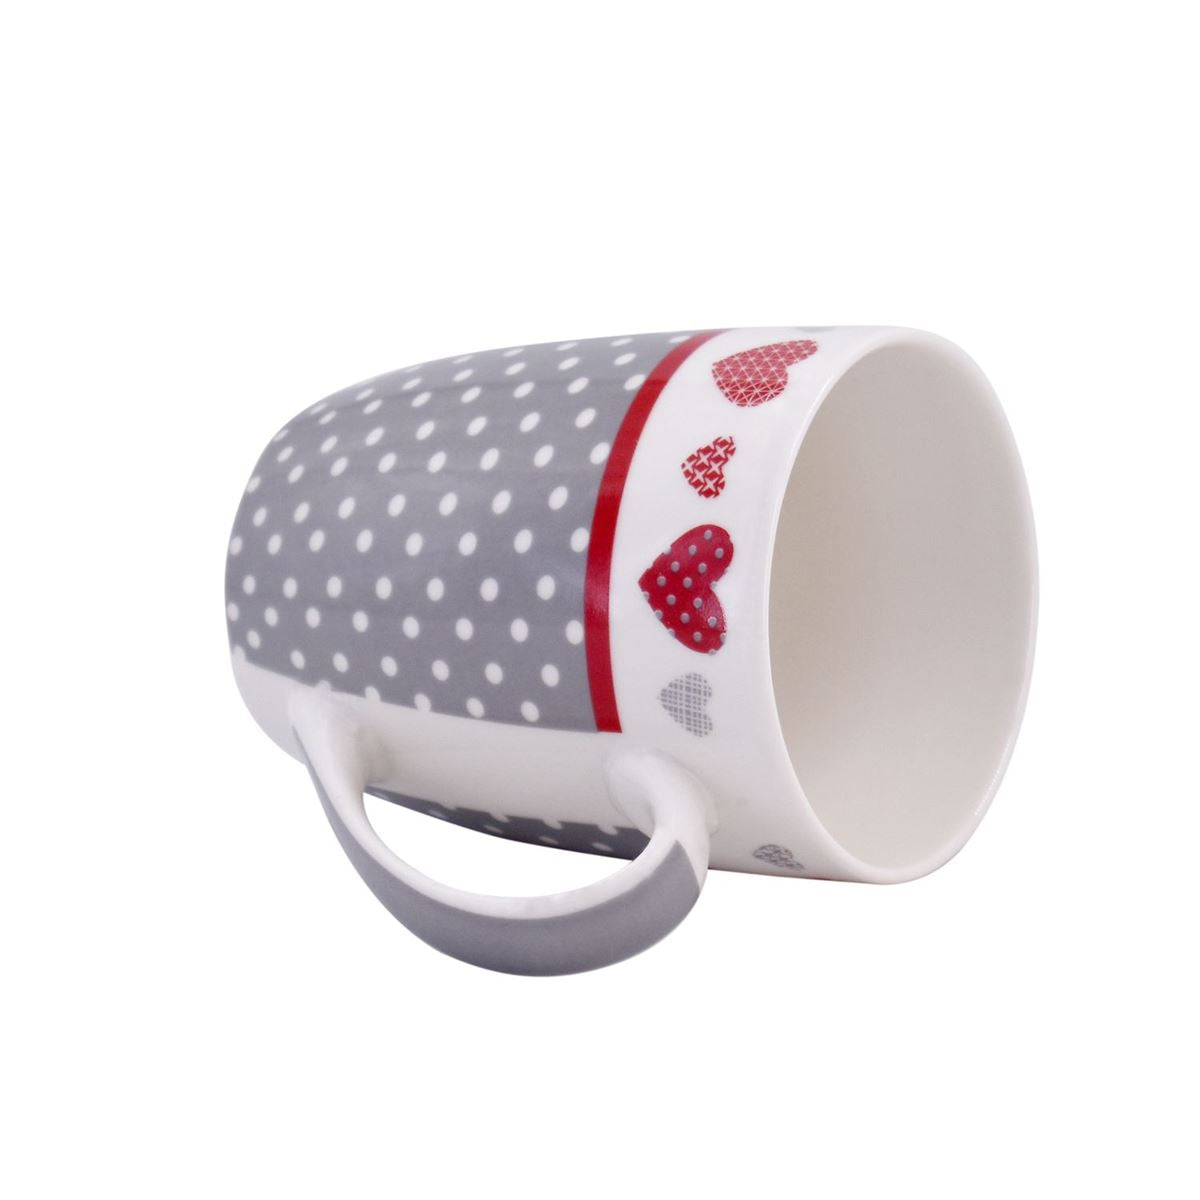 Printed Ceramic Coffee or Tea Mug with handle - 325ml (3788G-A)